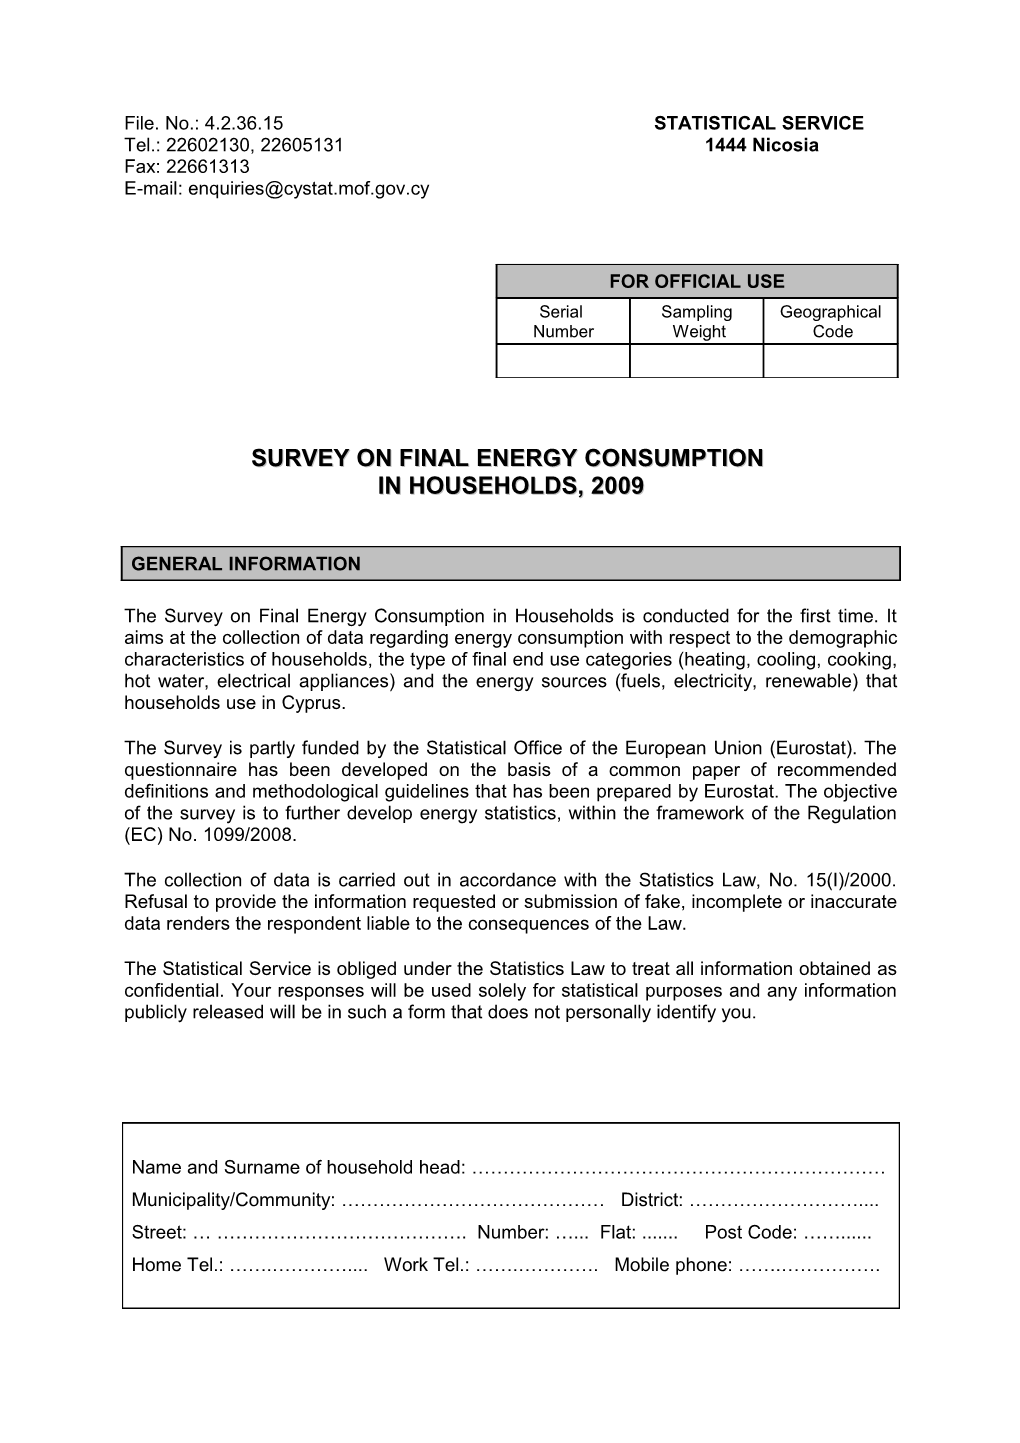 Survey on Final Energy Consumption